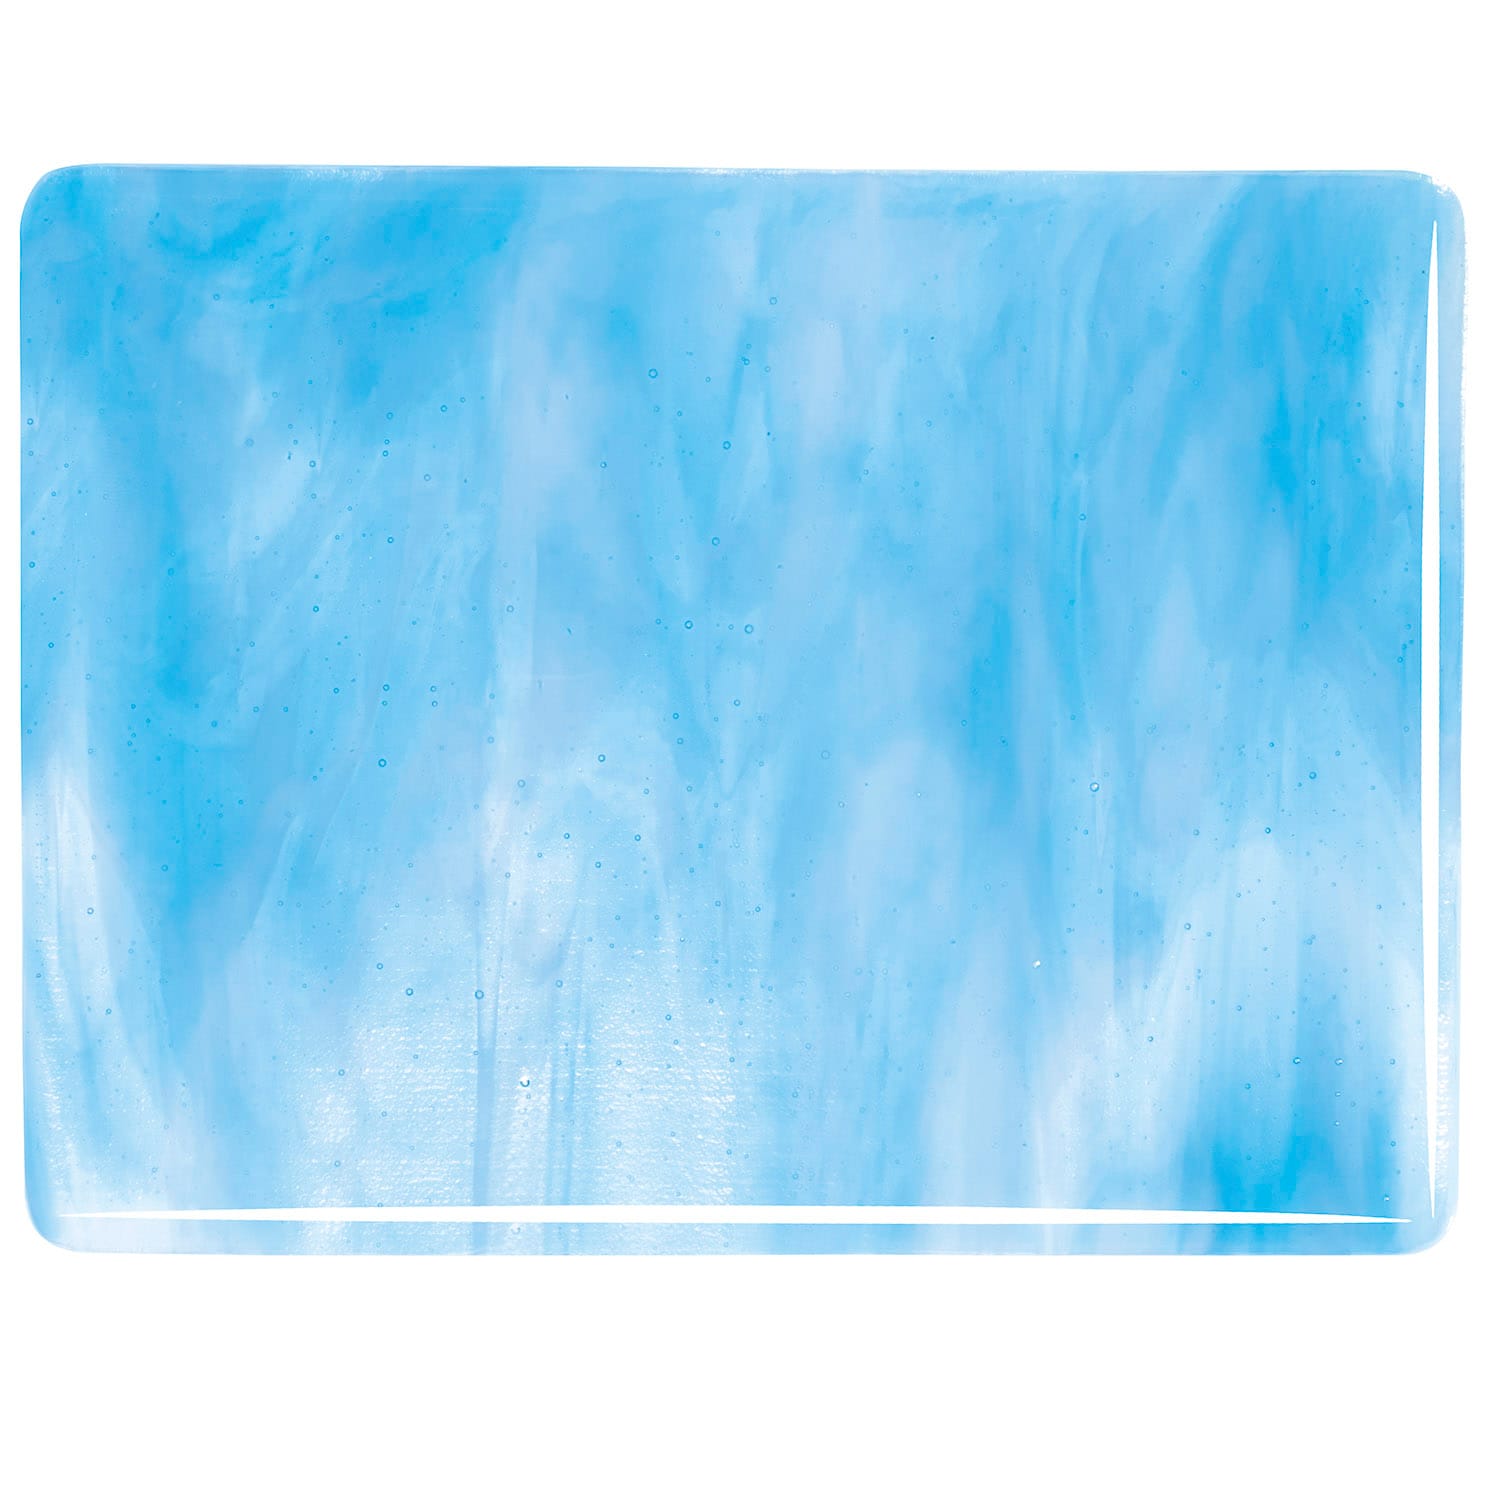 Bullseye COE90 Fusing Glass 003116 Clear, Turquoise Blue, White Half Sheet